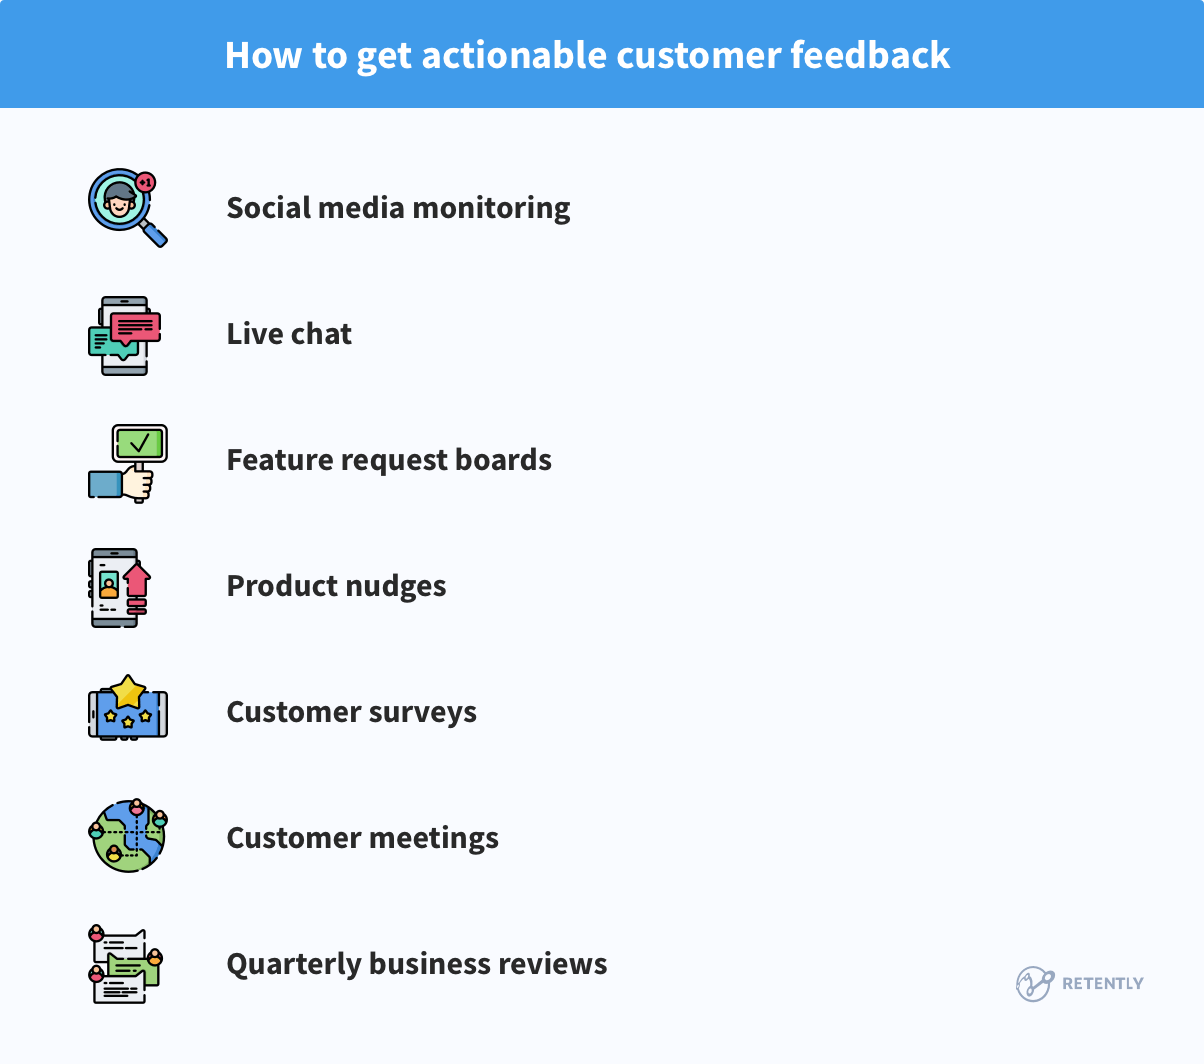 How to get actionable customer feedback